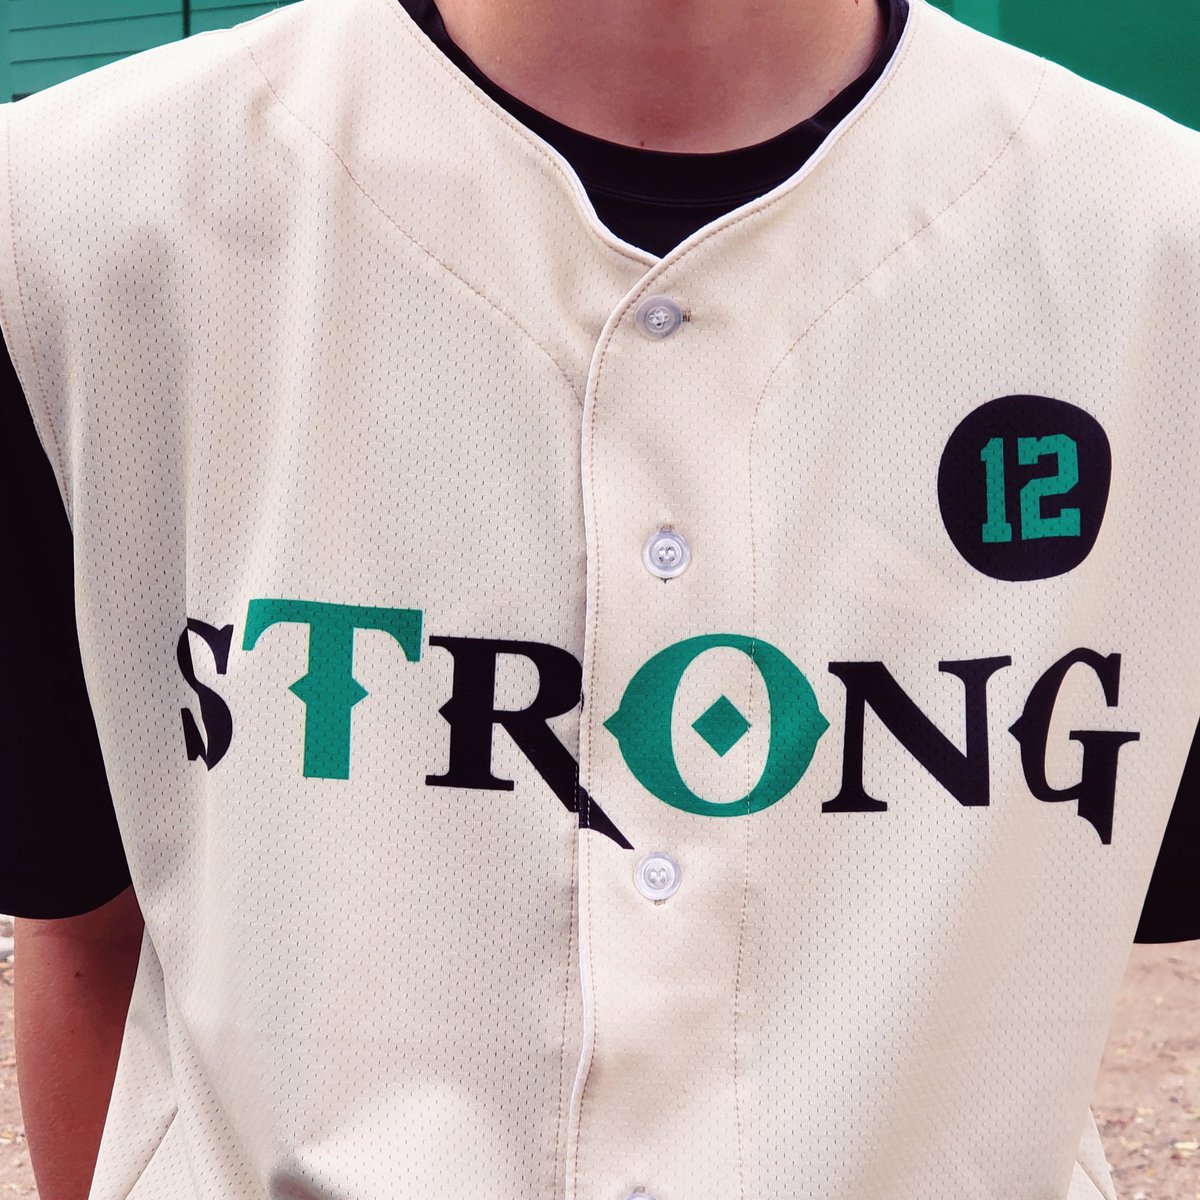 Thousand Oaks High School varsity baseball debut uniform honoring our recent tragedies. #BorderlineStrong #woolseyfire #tostrong @tohsbaseball